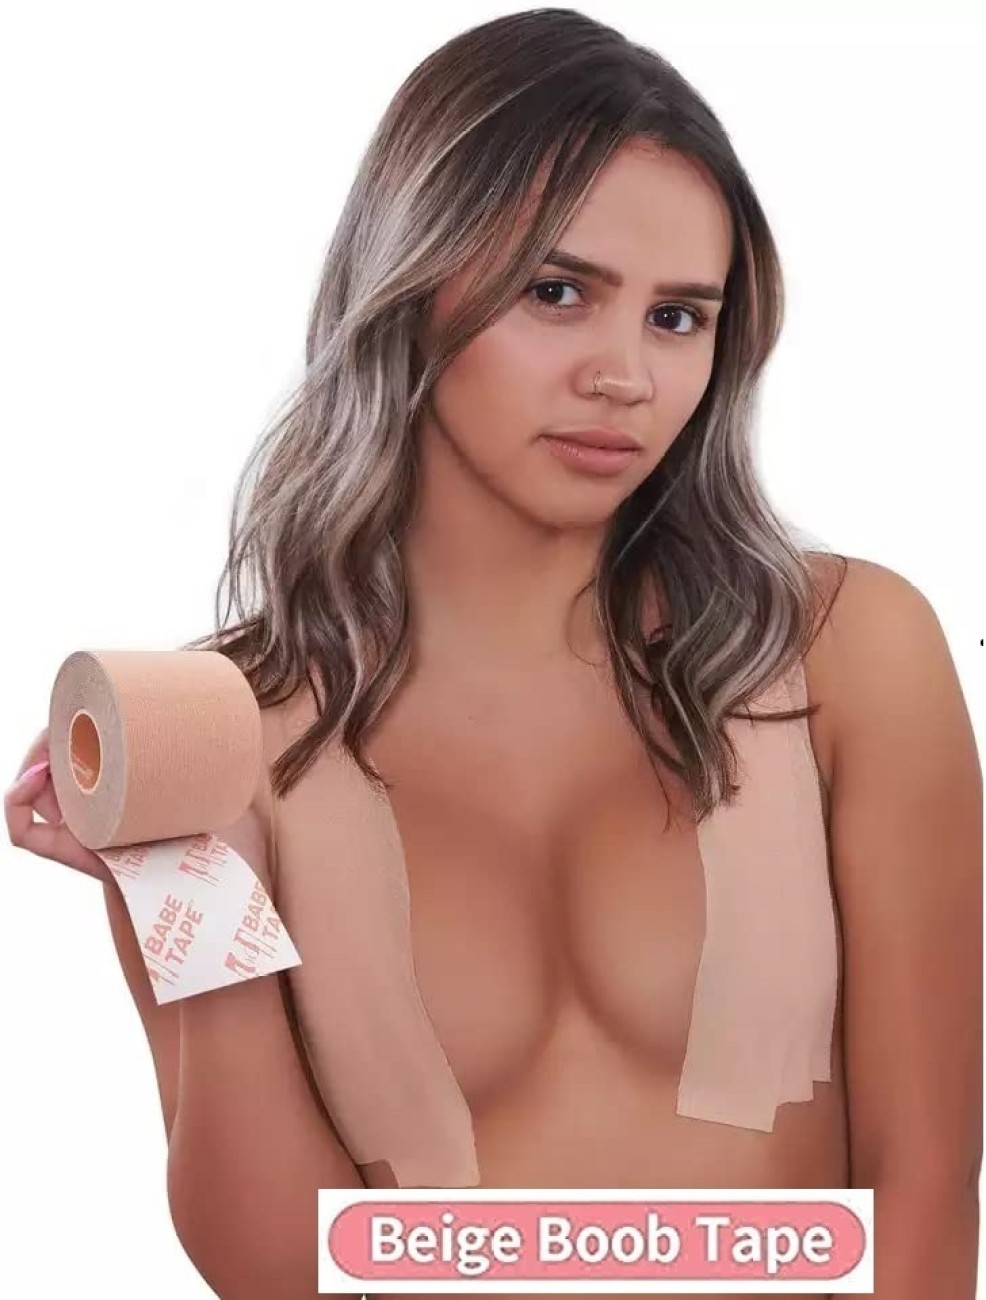 My Machine Breast Shaper Lifter Boob Tape with 10 Nipple Pasties